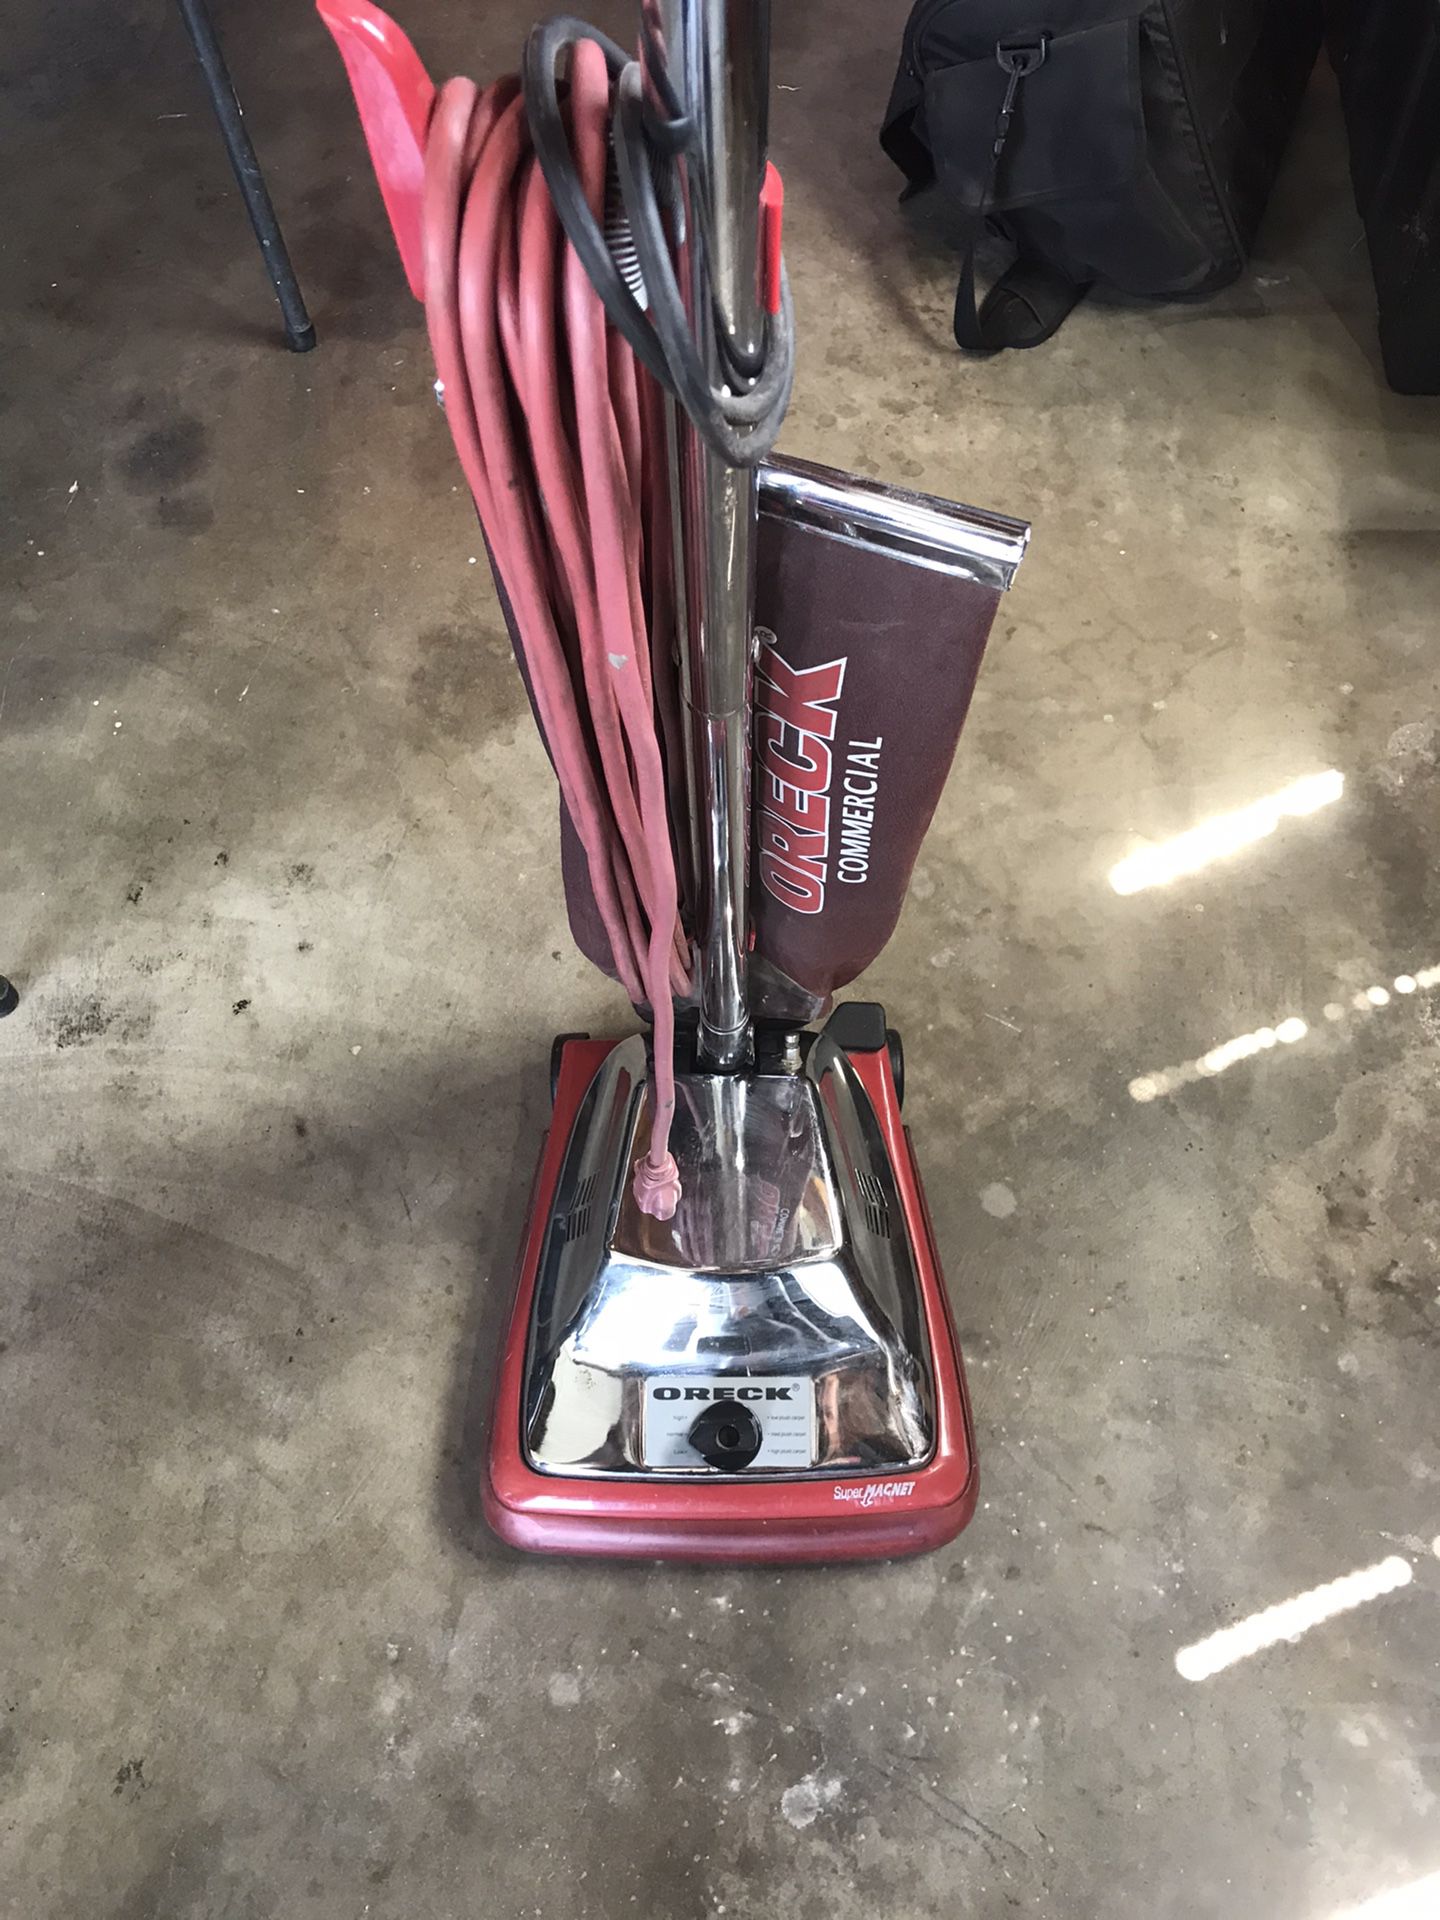 Used oreck commercial vacuum